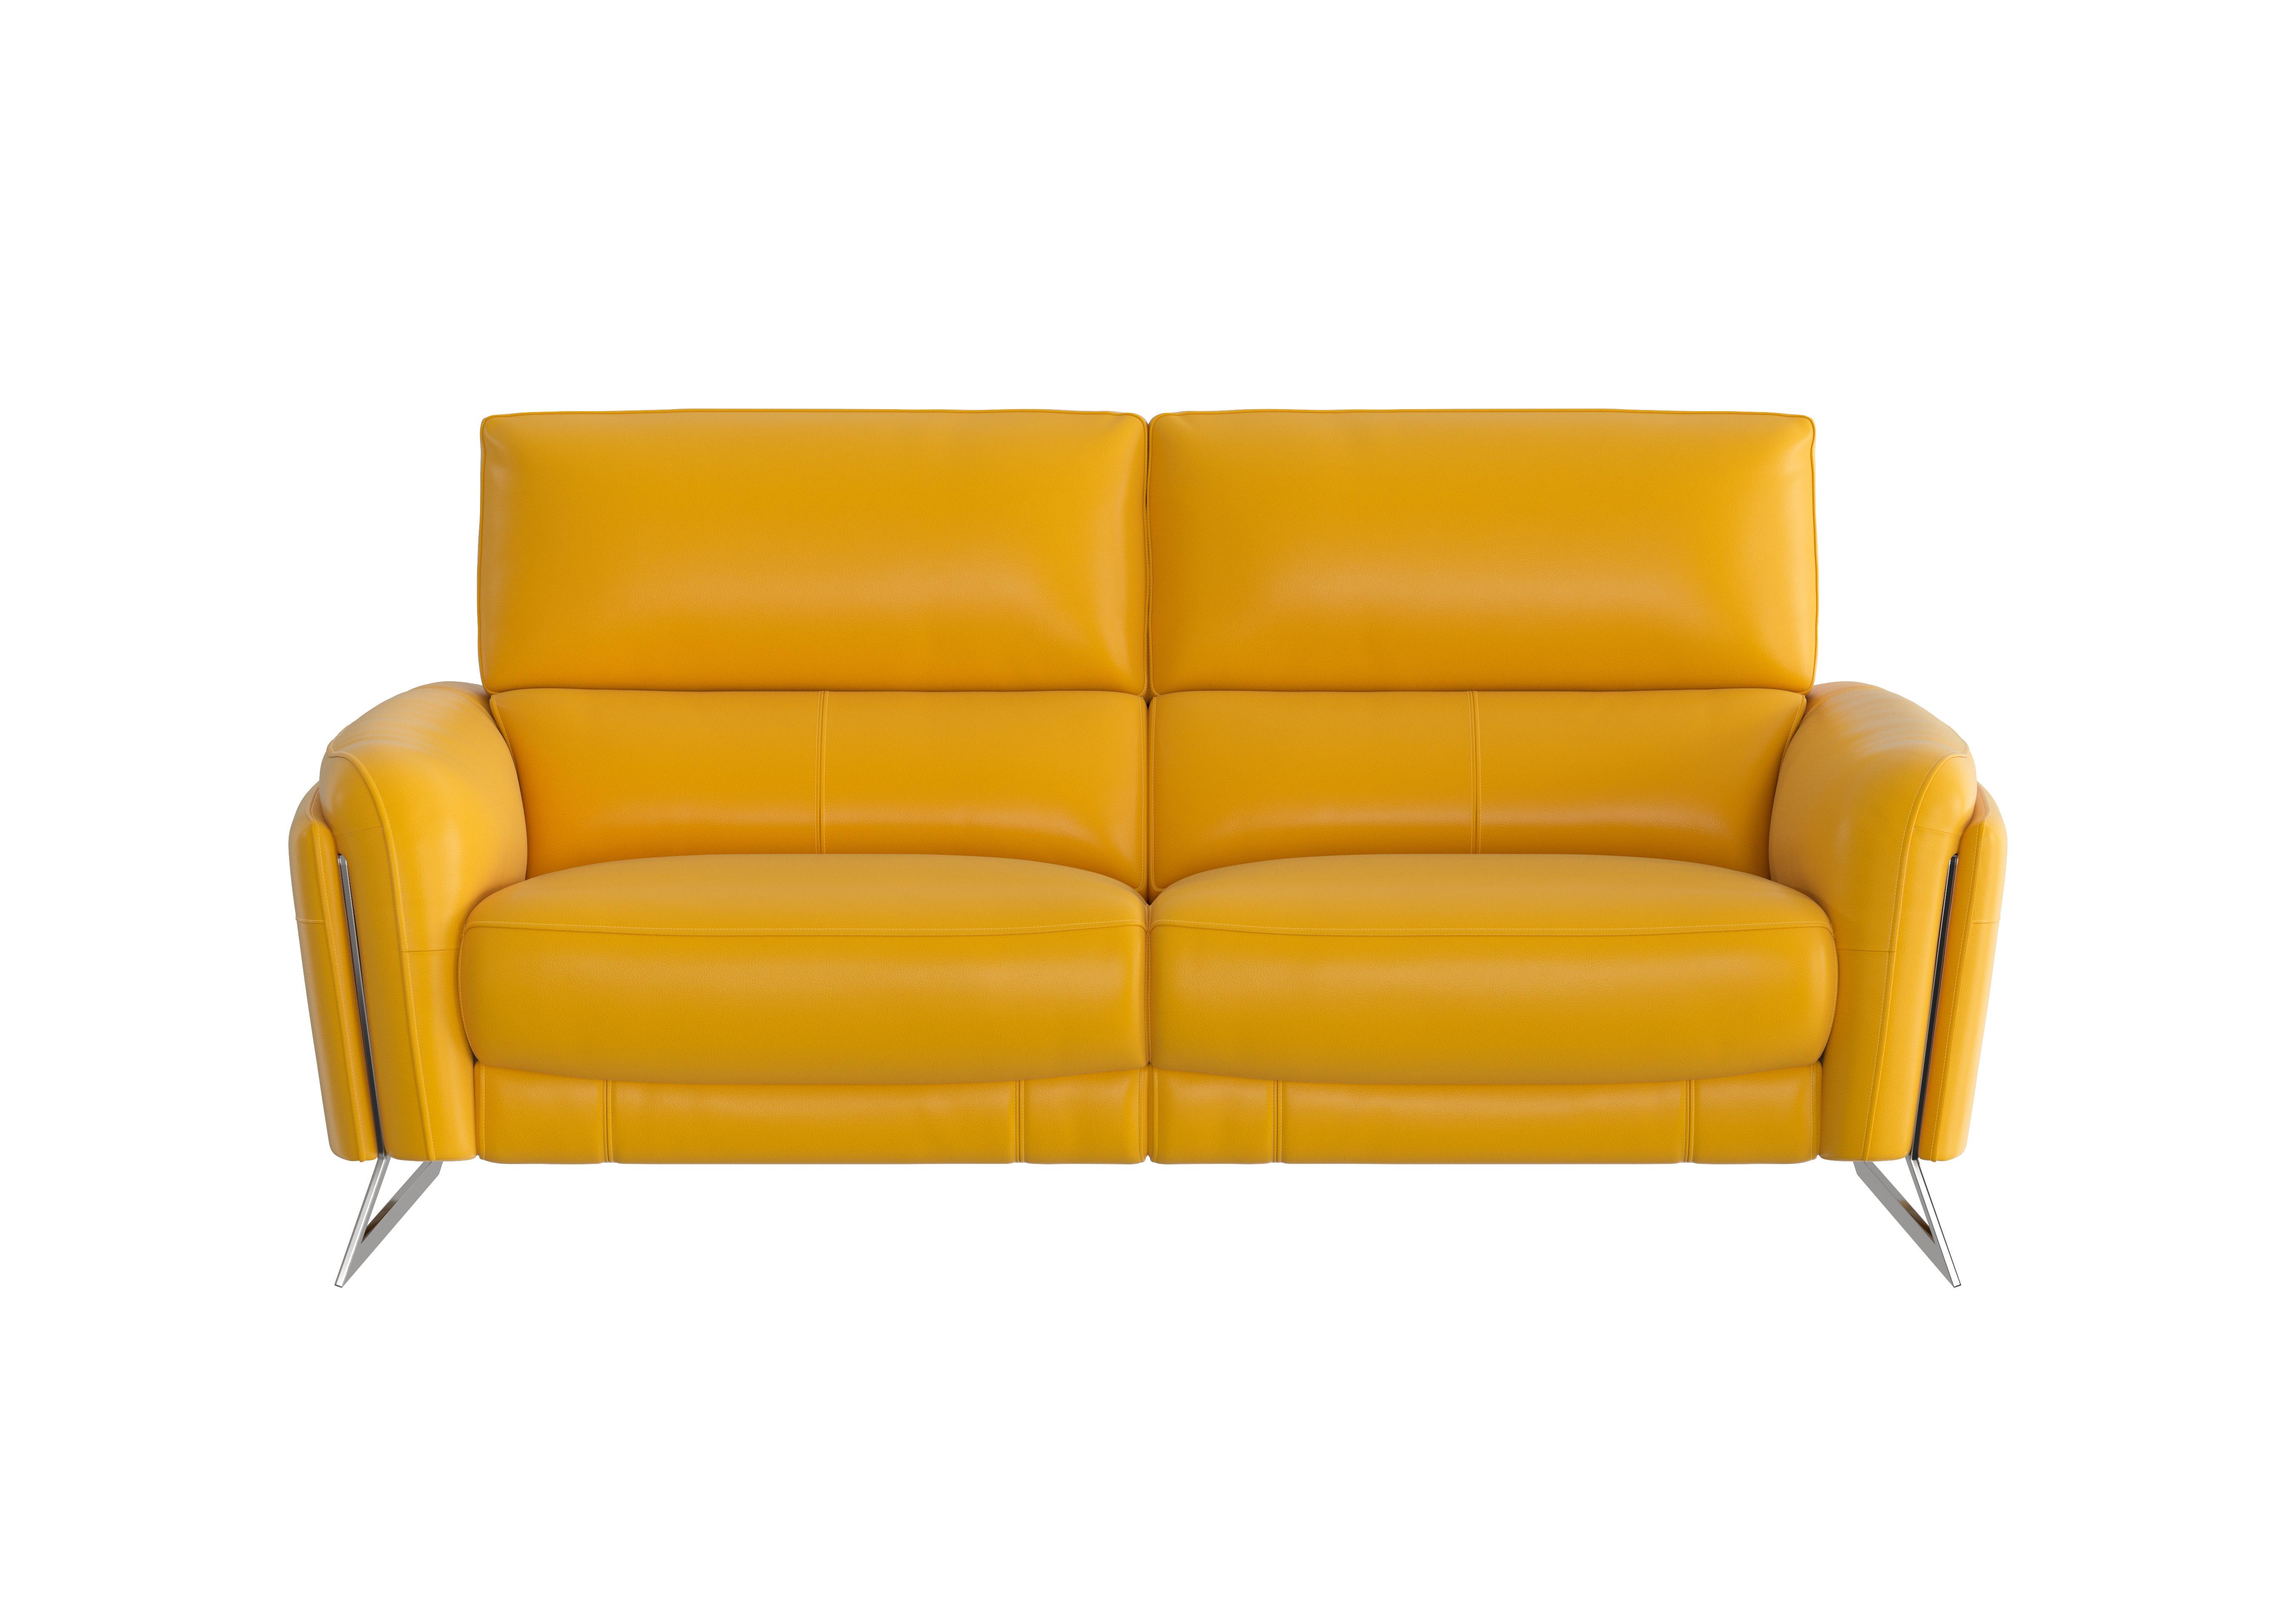 Amarilla 3 Seater Leather Sofa in Nc-303e Sunflower on Furniture Village